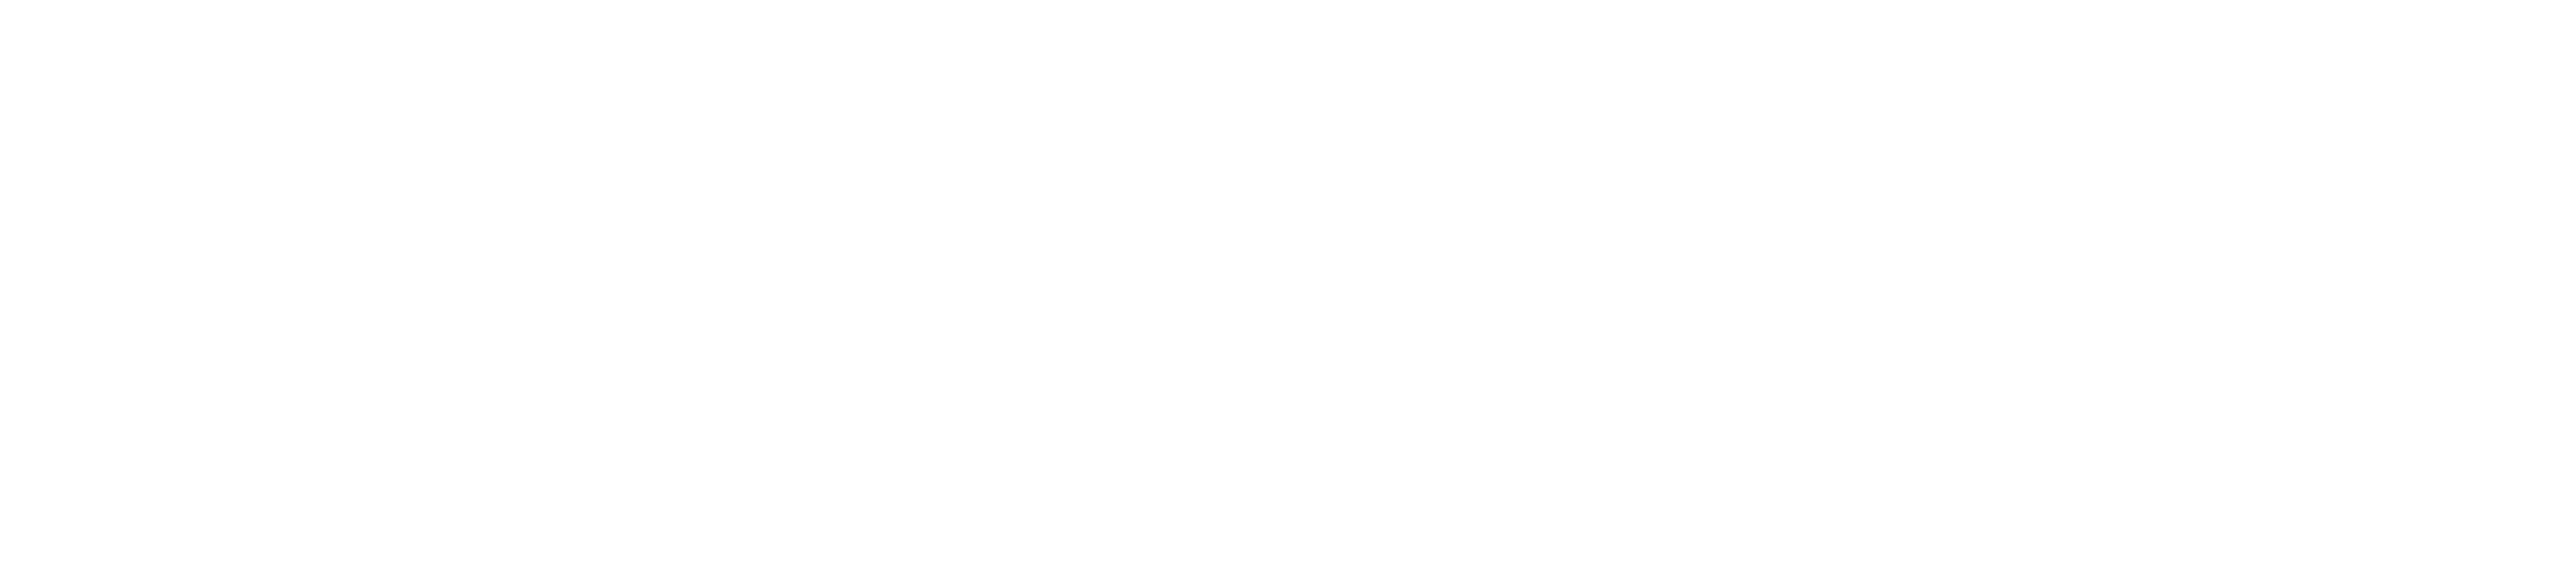 Jere W. Morehead signature